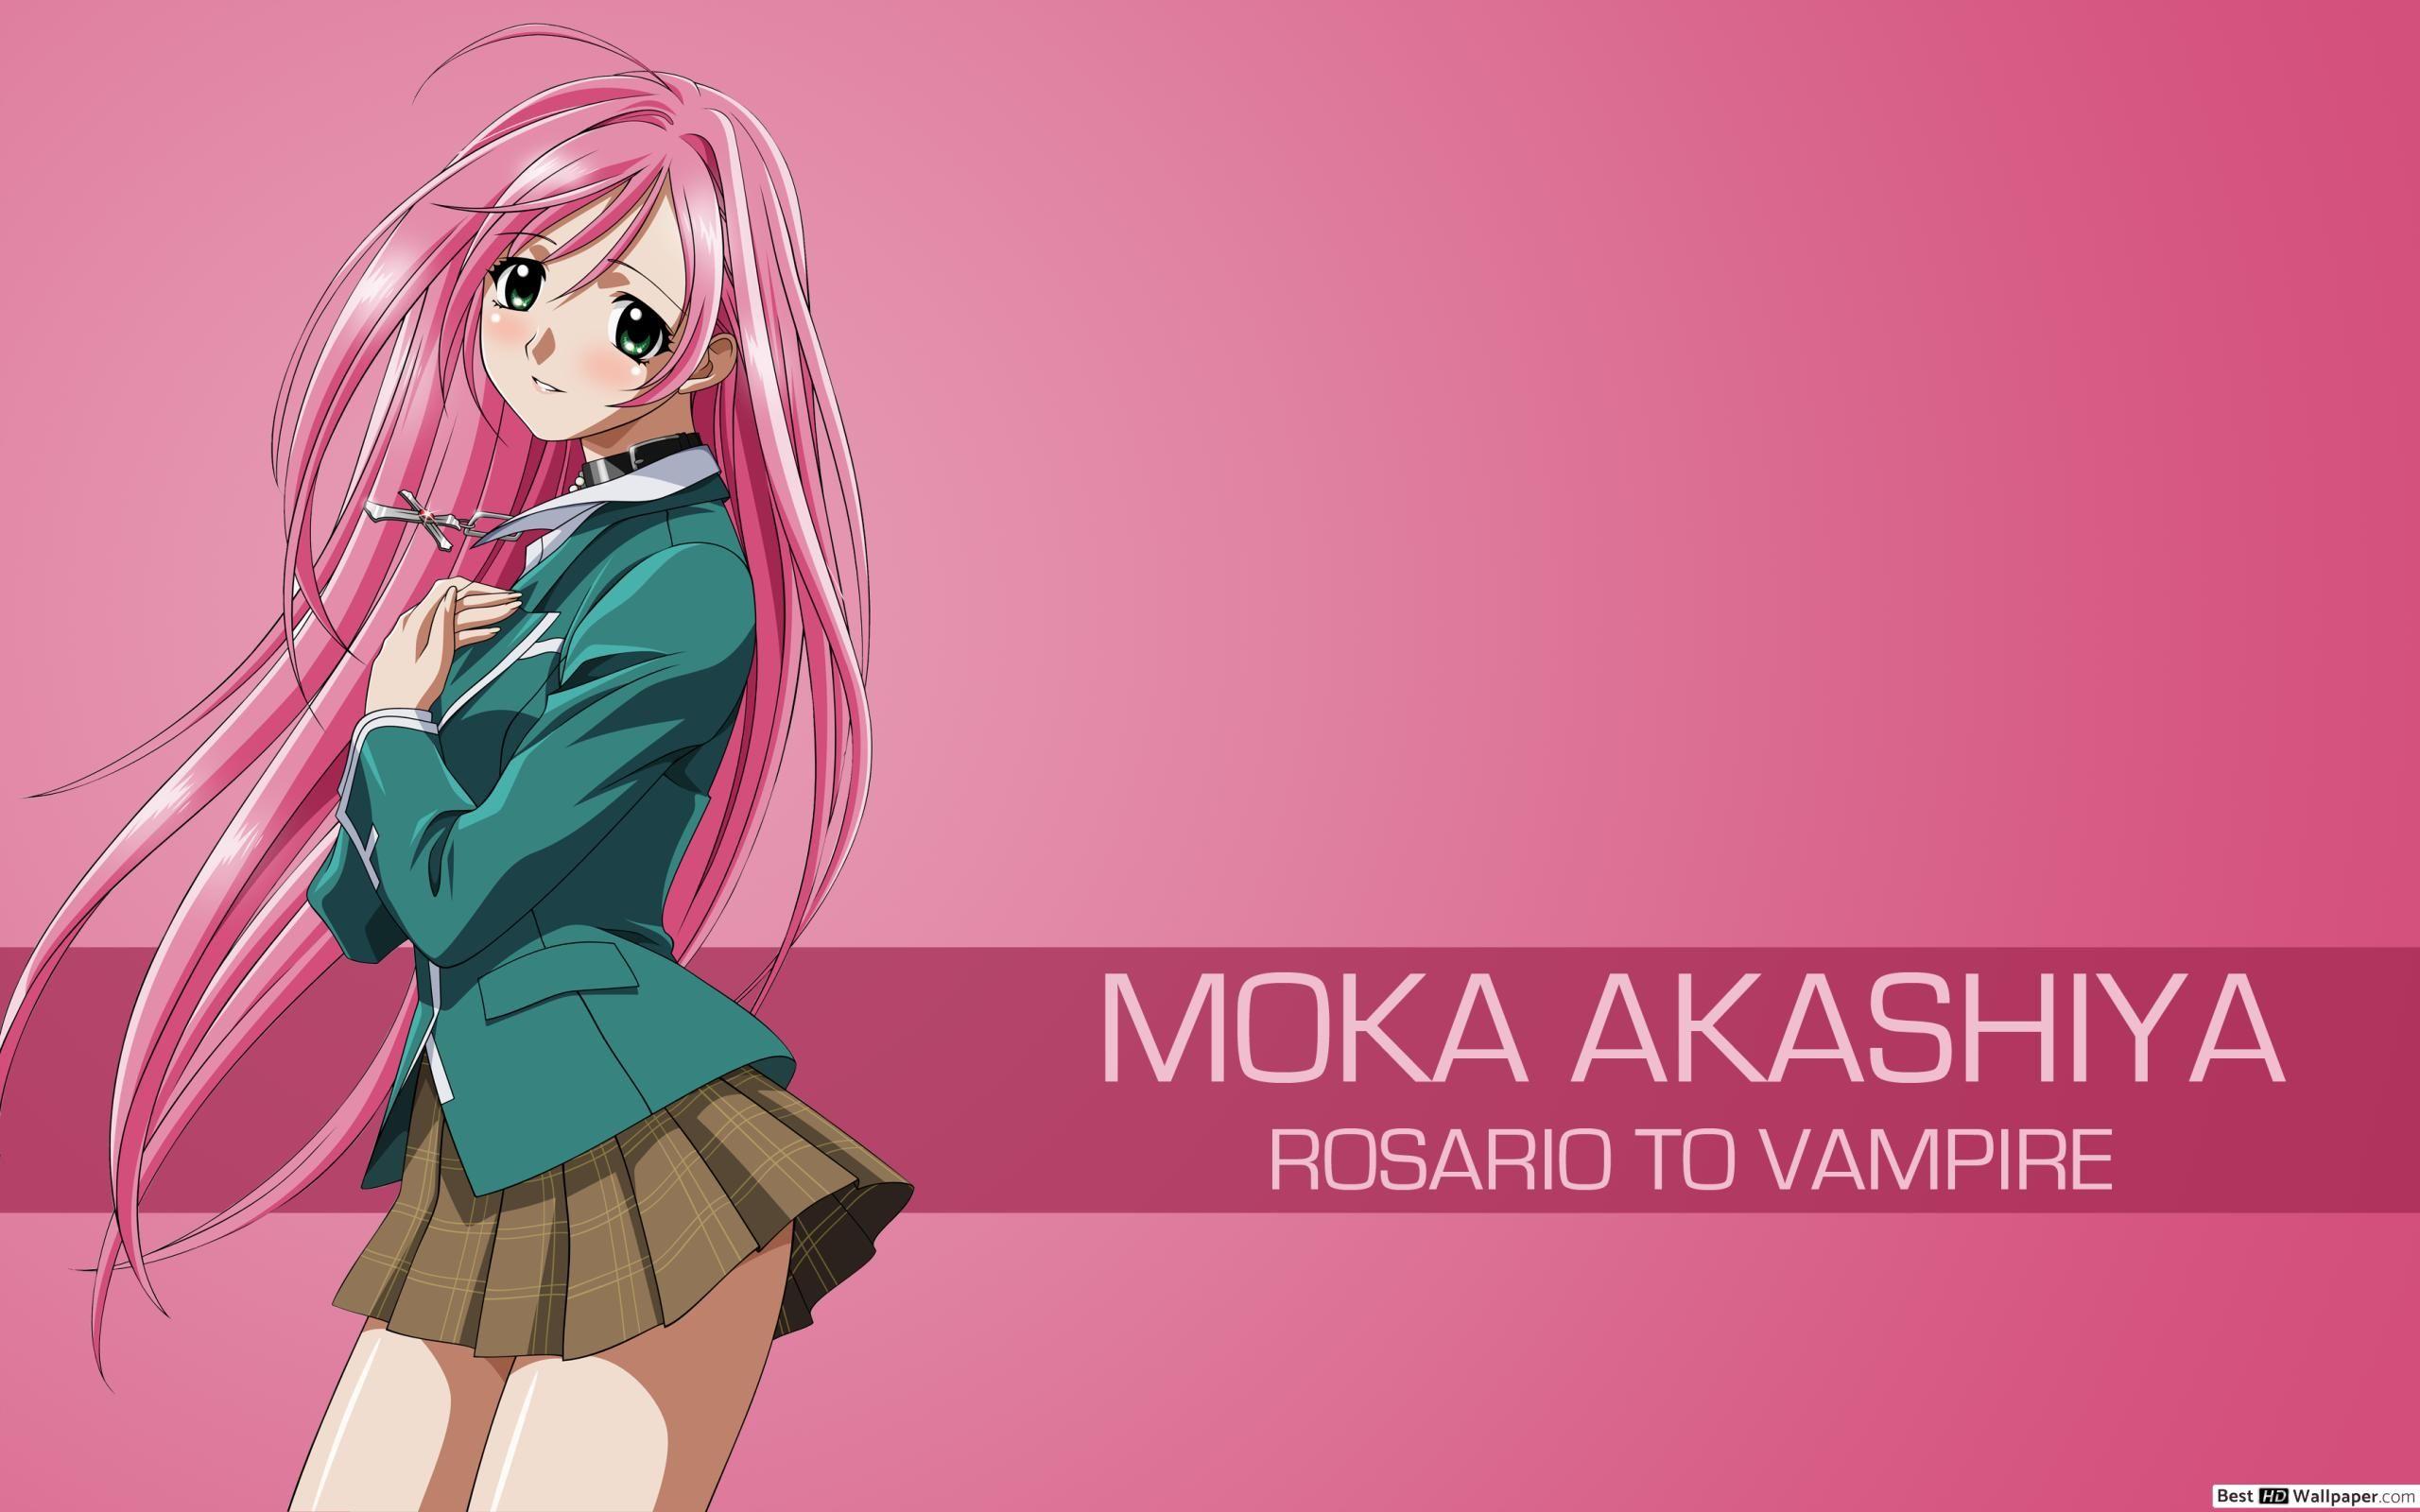 Moka akashiya, rosario + vampire HD wallpaper download